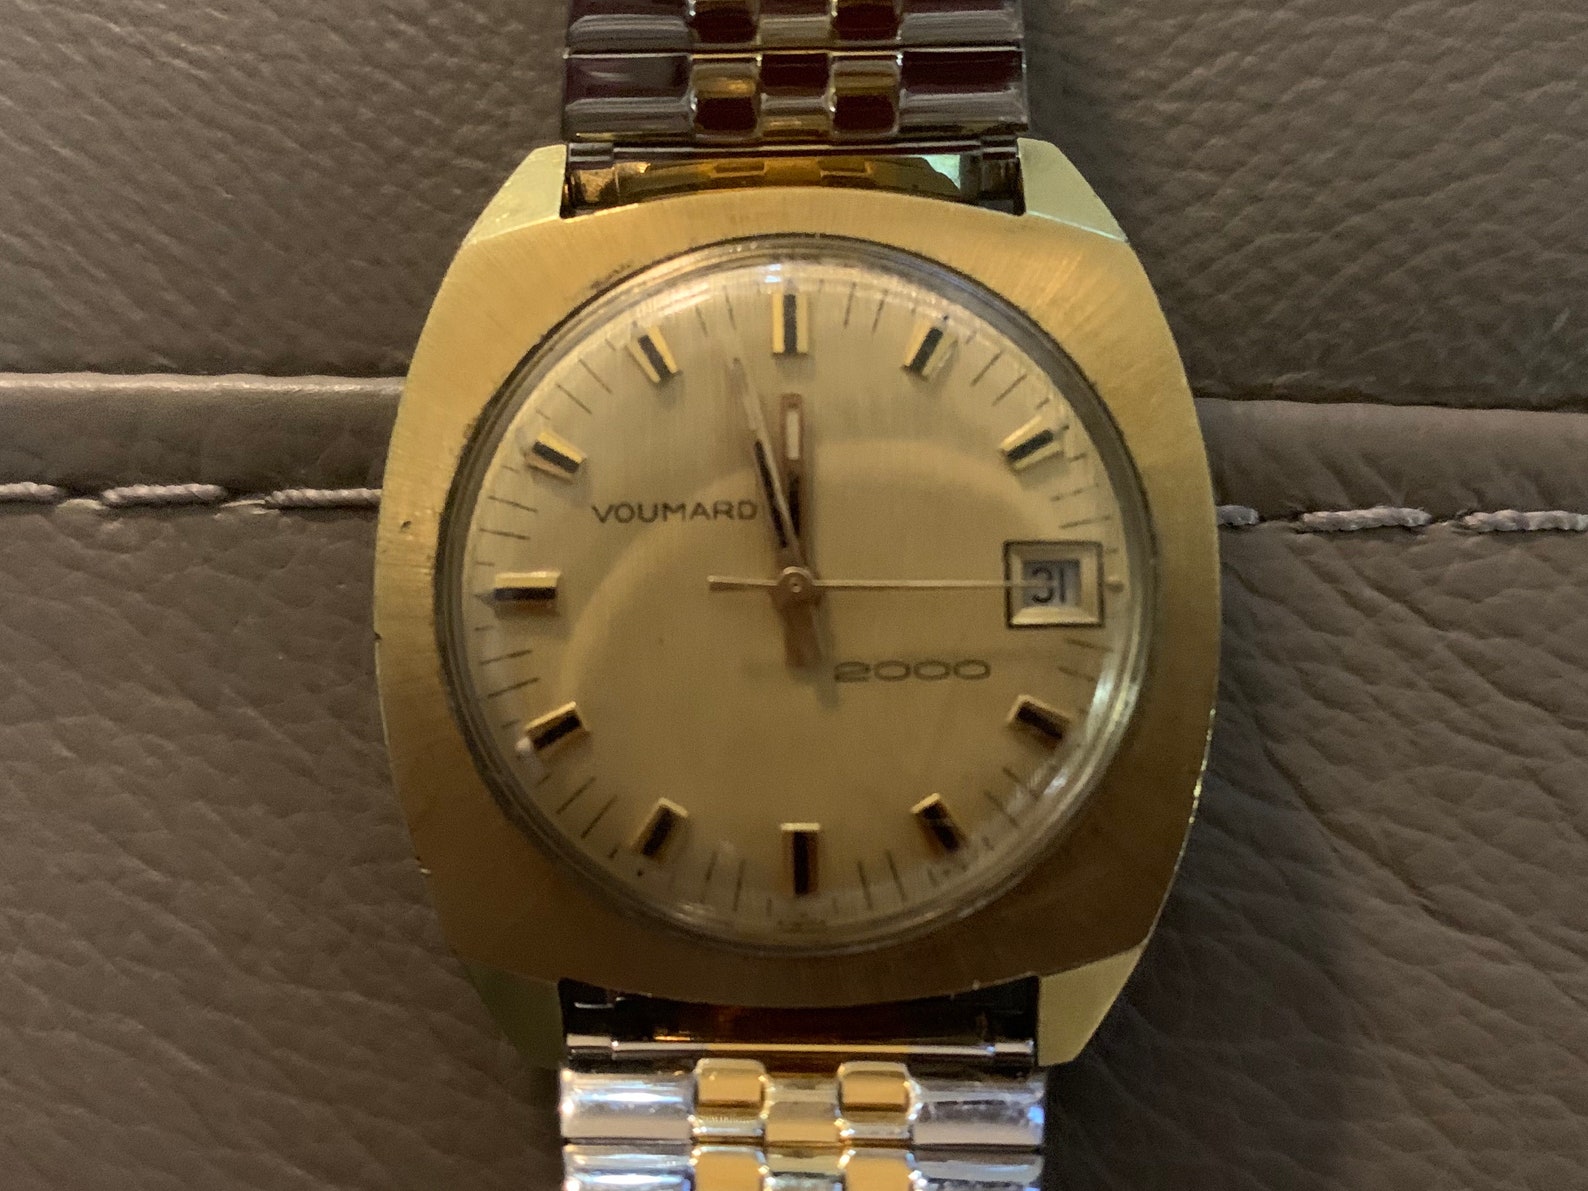 VOUMARD 2000 BACKWIND Gold Plate Swiss Watch Fine Vintage | Etsy